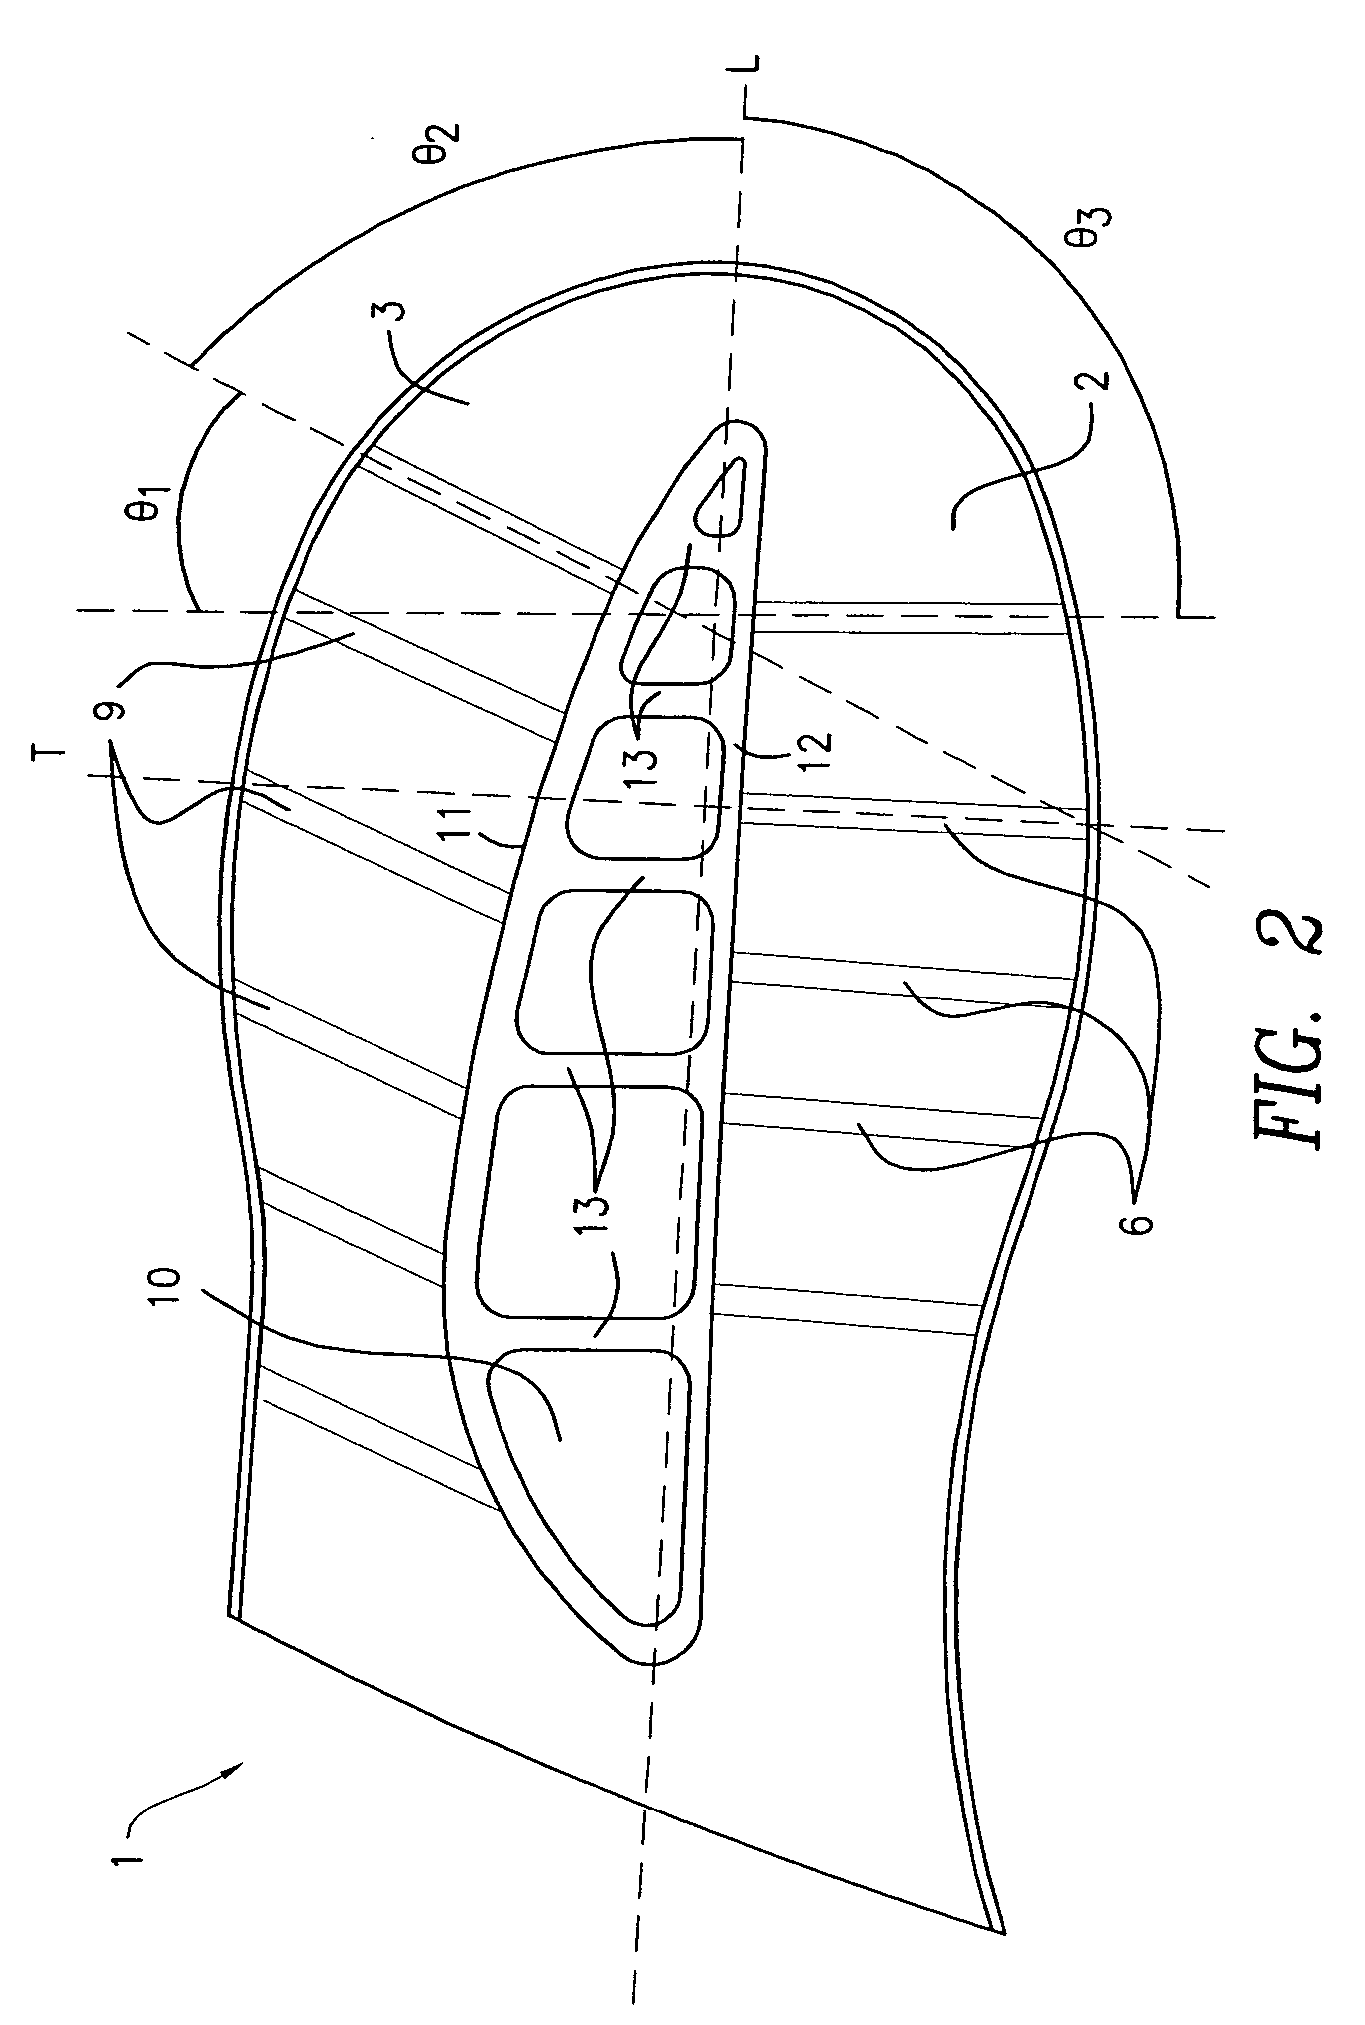 Mechanical cushioning system for footwear